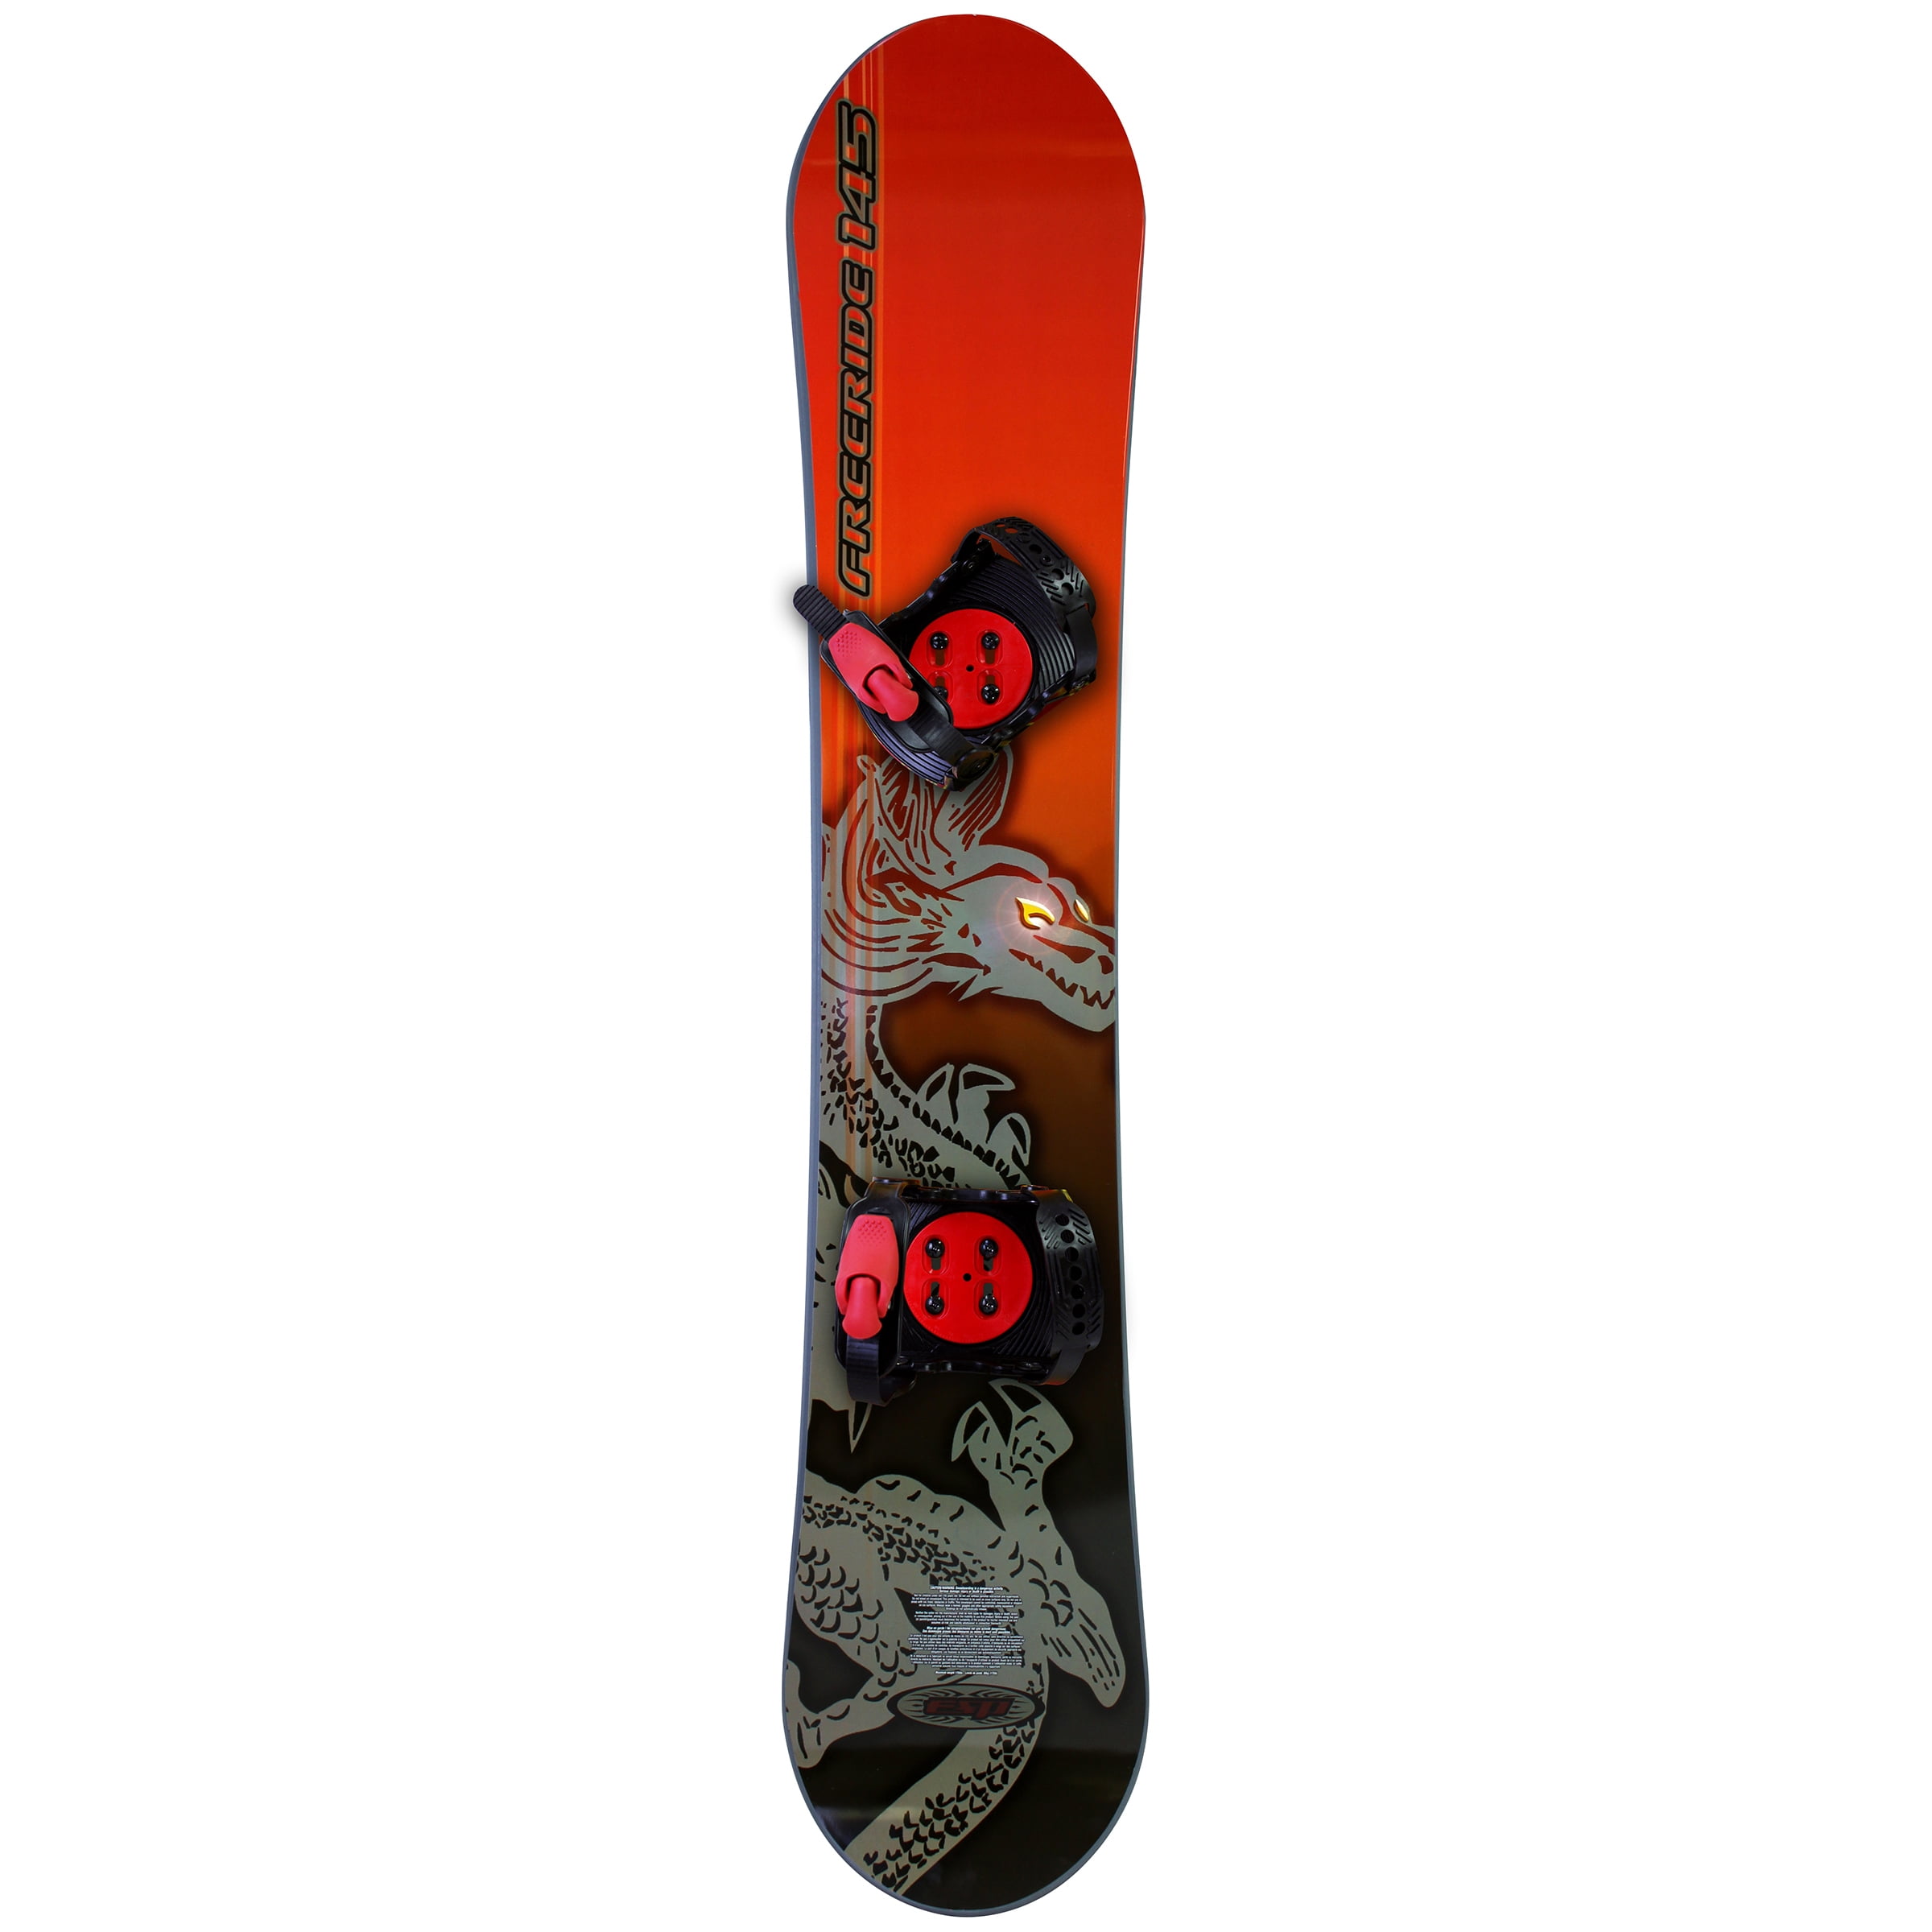 ESP 145 cm Freeride Snowboard - Flex Bindings - Beginner to Professional Snowboard - Solid Core Construction